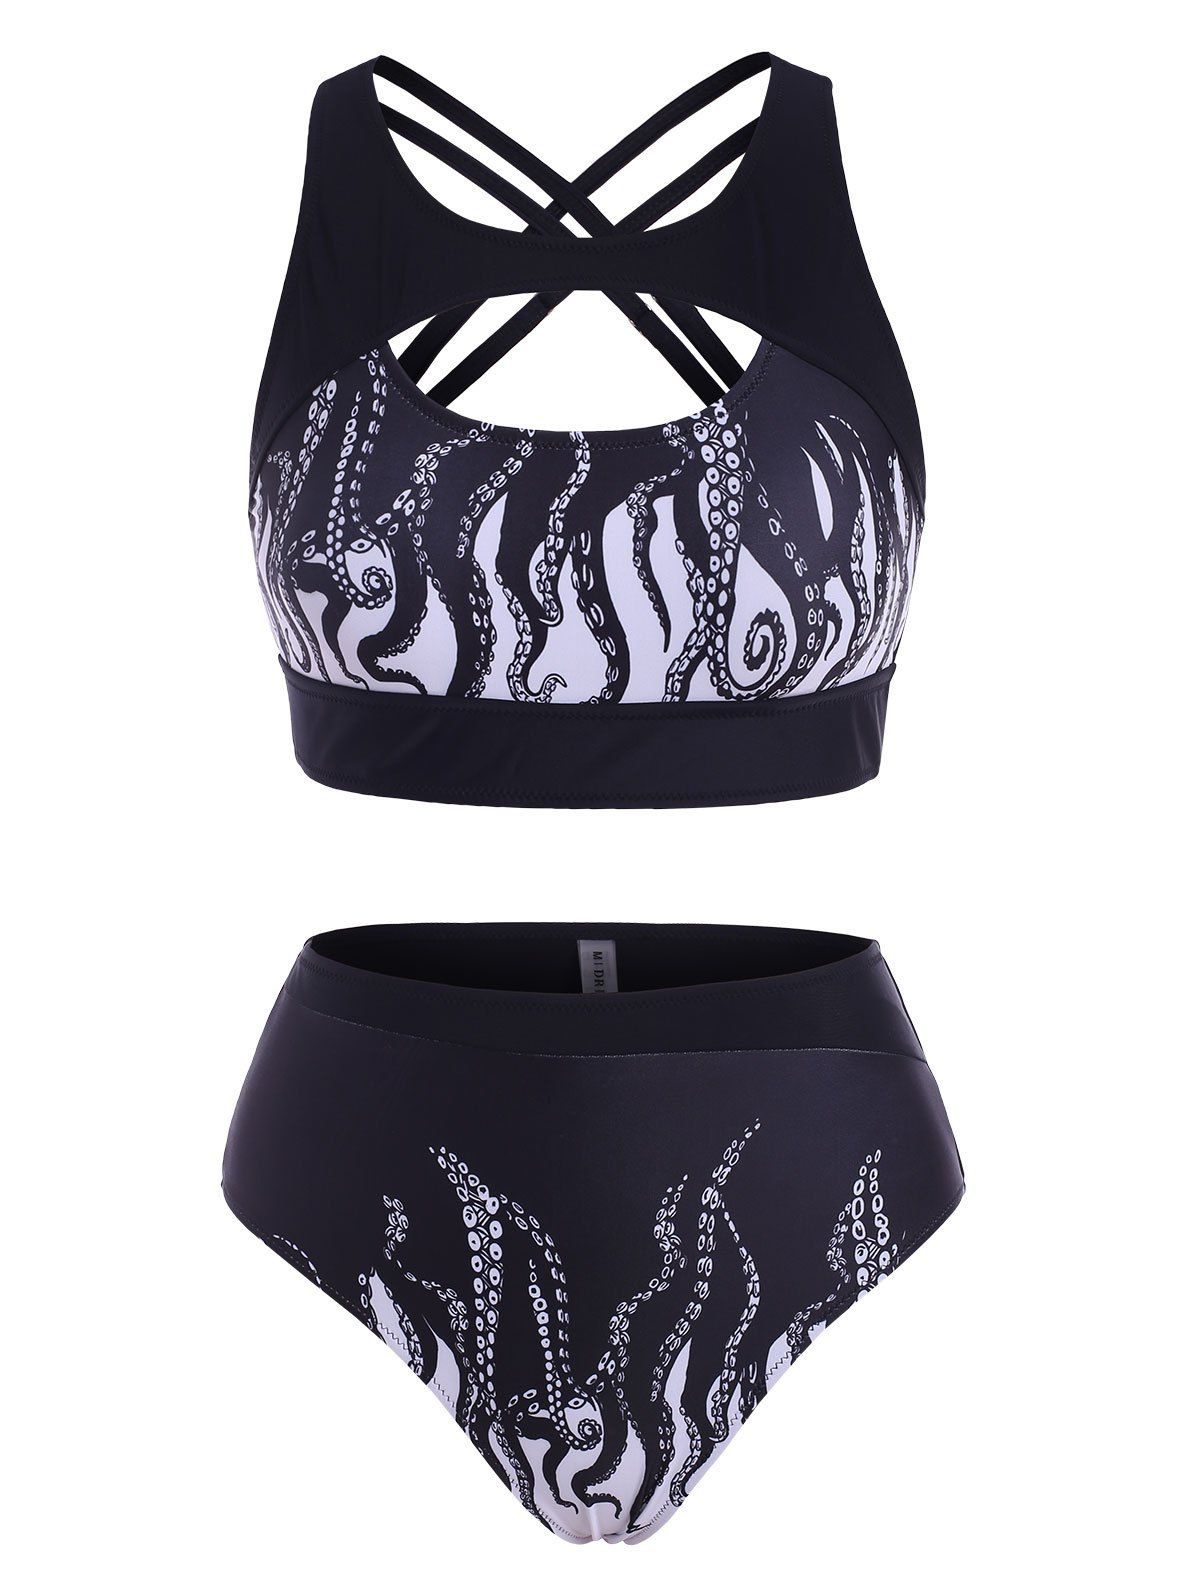 Beach Cutout Swimsuit Criss Cross Octopus Print Tankini Swimwear - BLACK XL